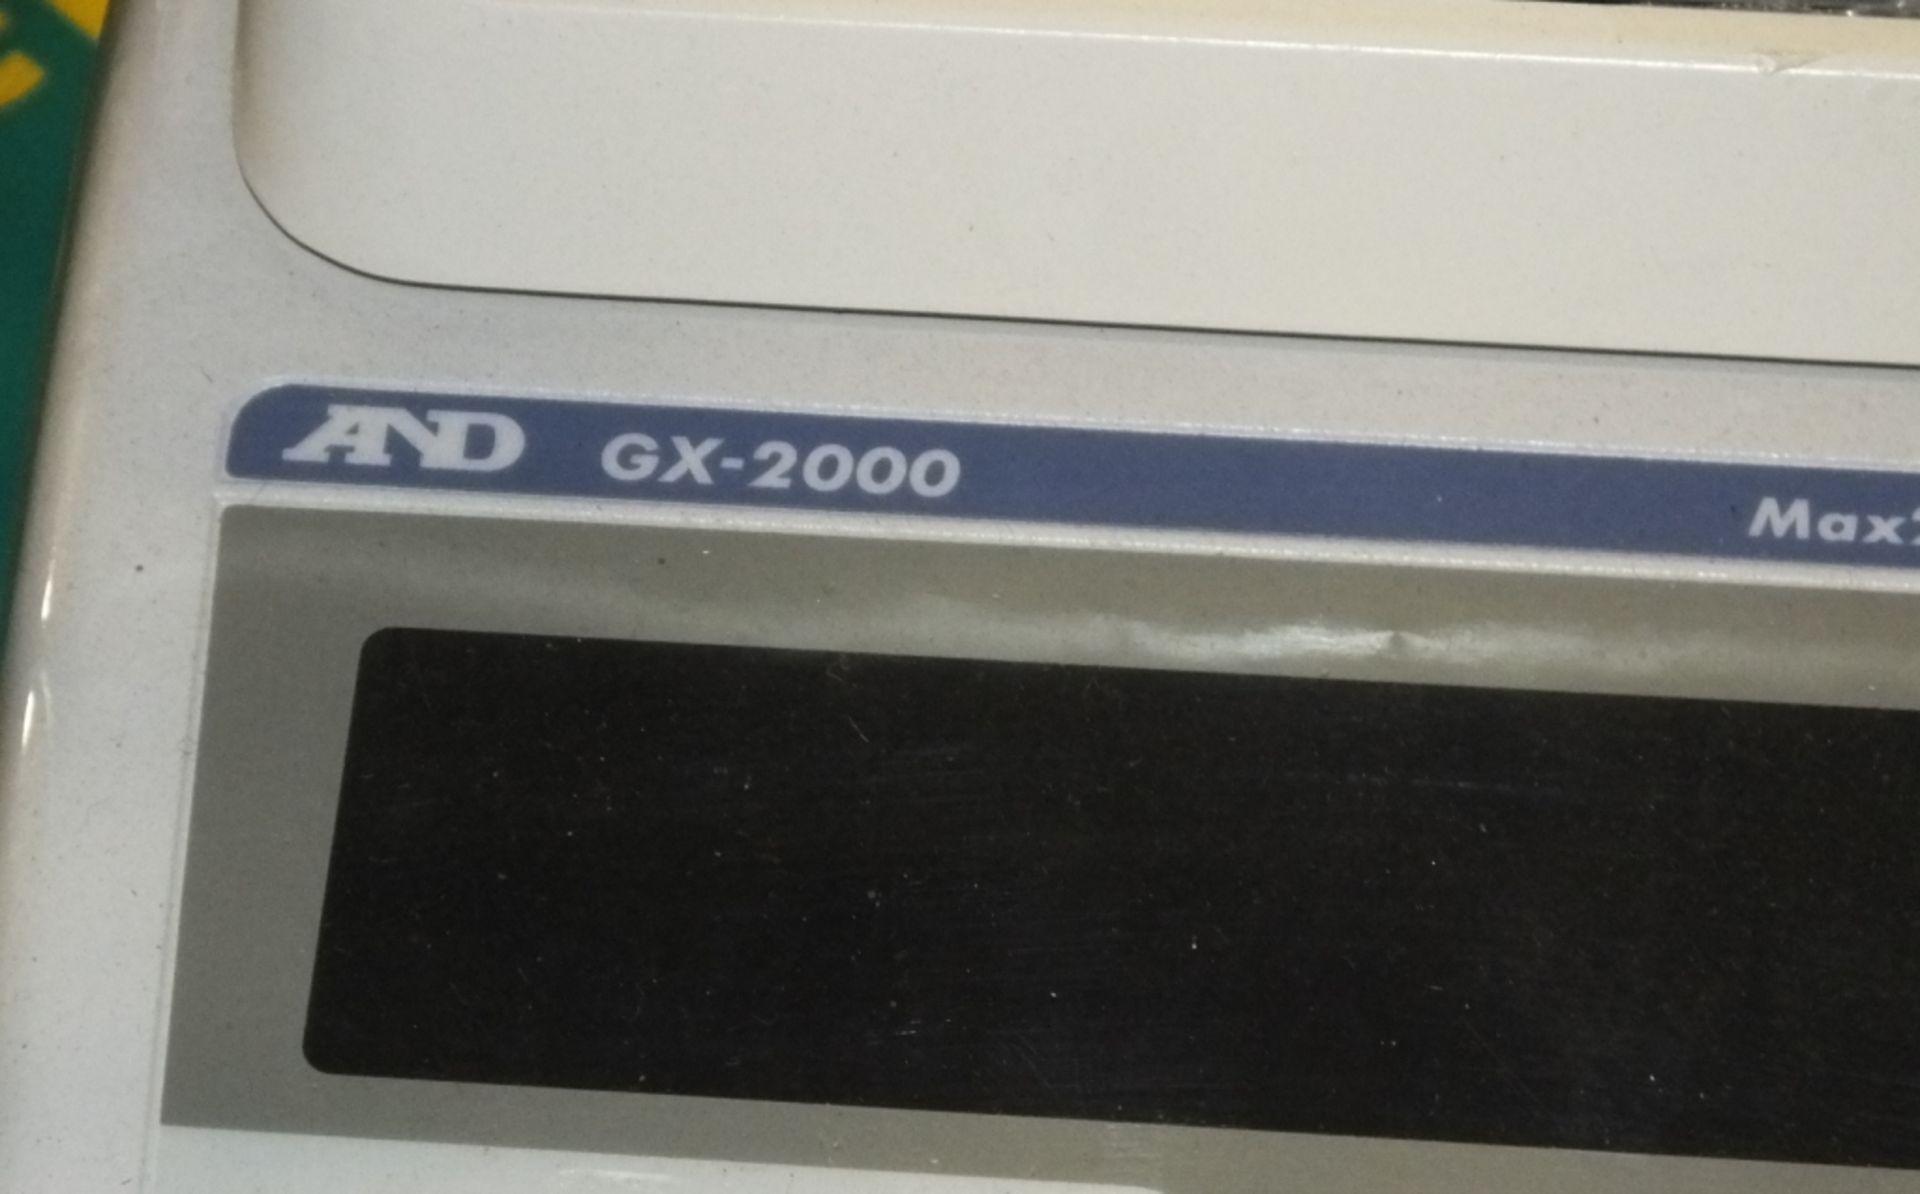 AND GX-2000 laboratory digital scales - Bild 2 aus 3